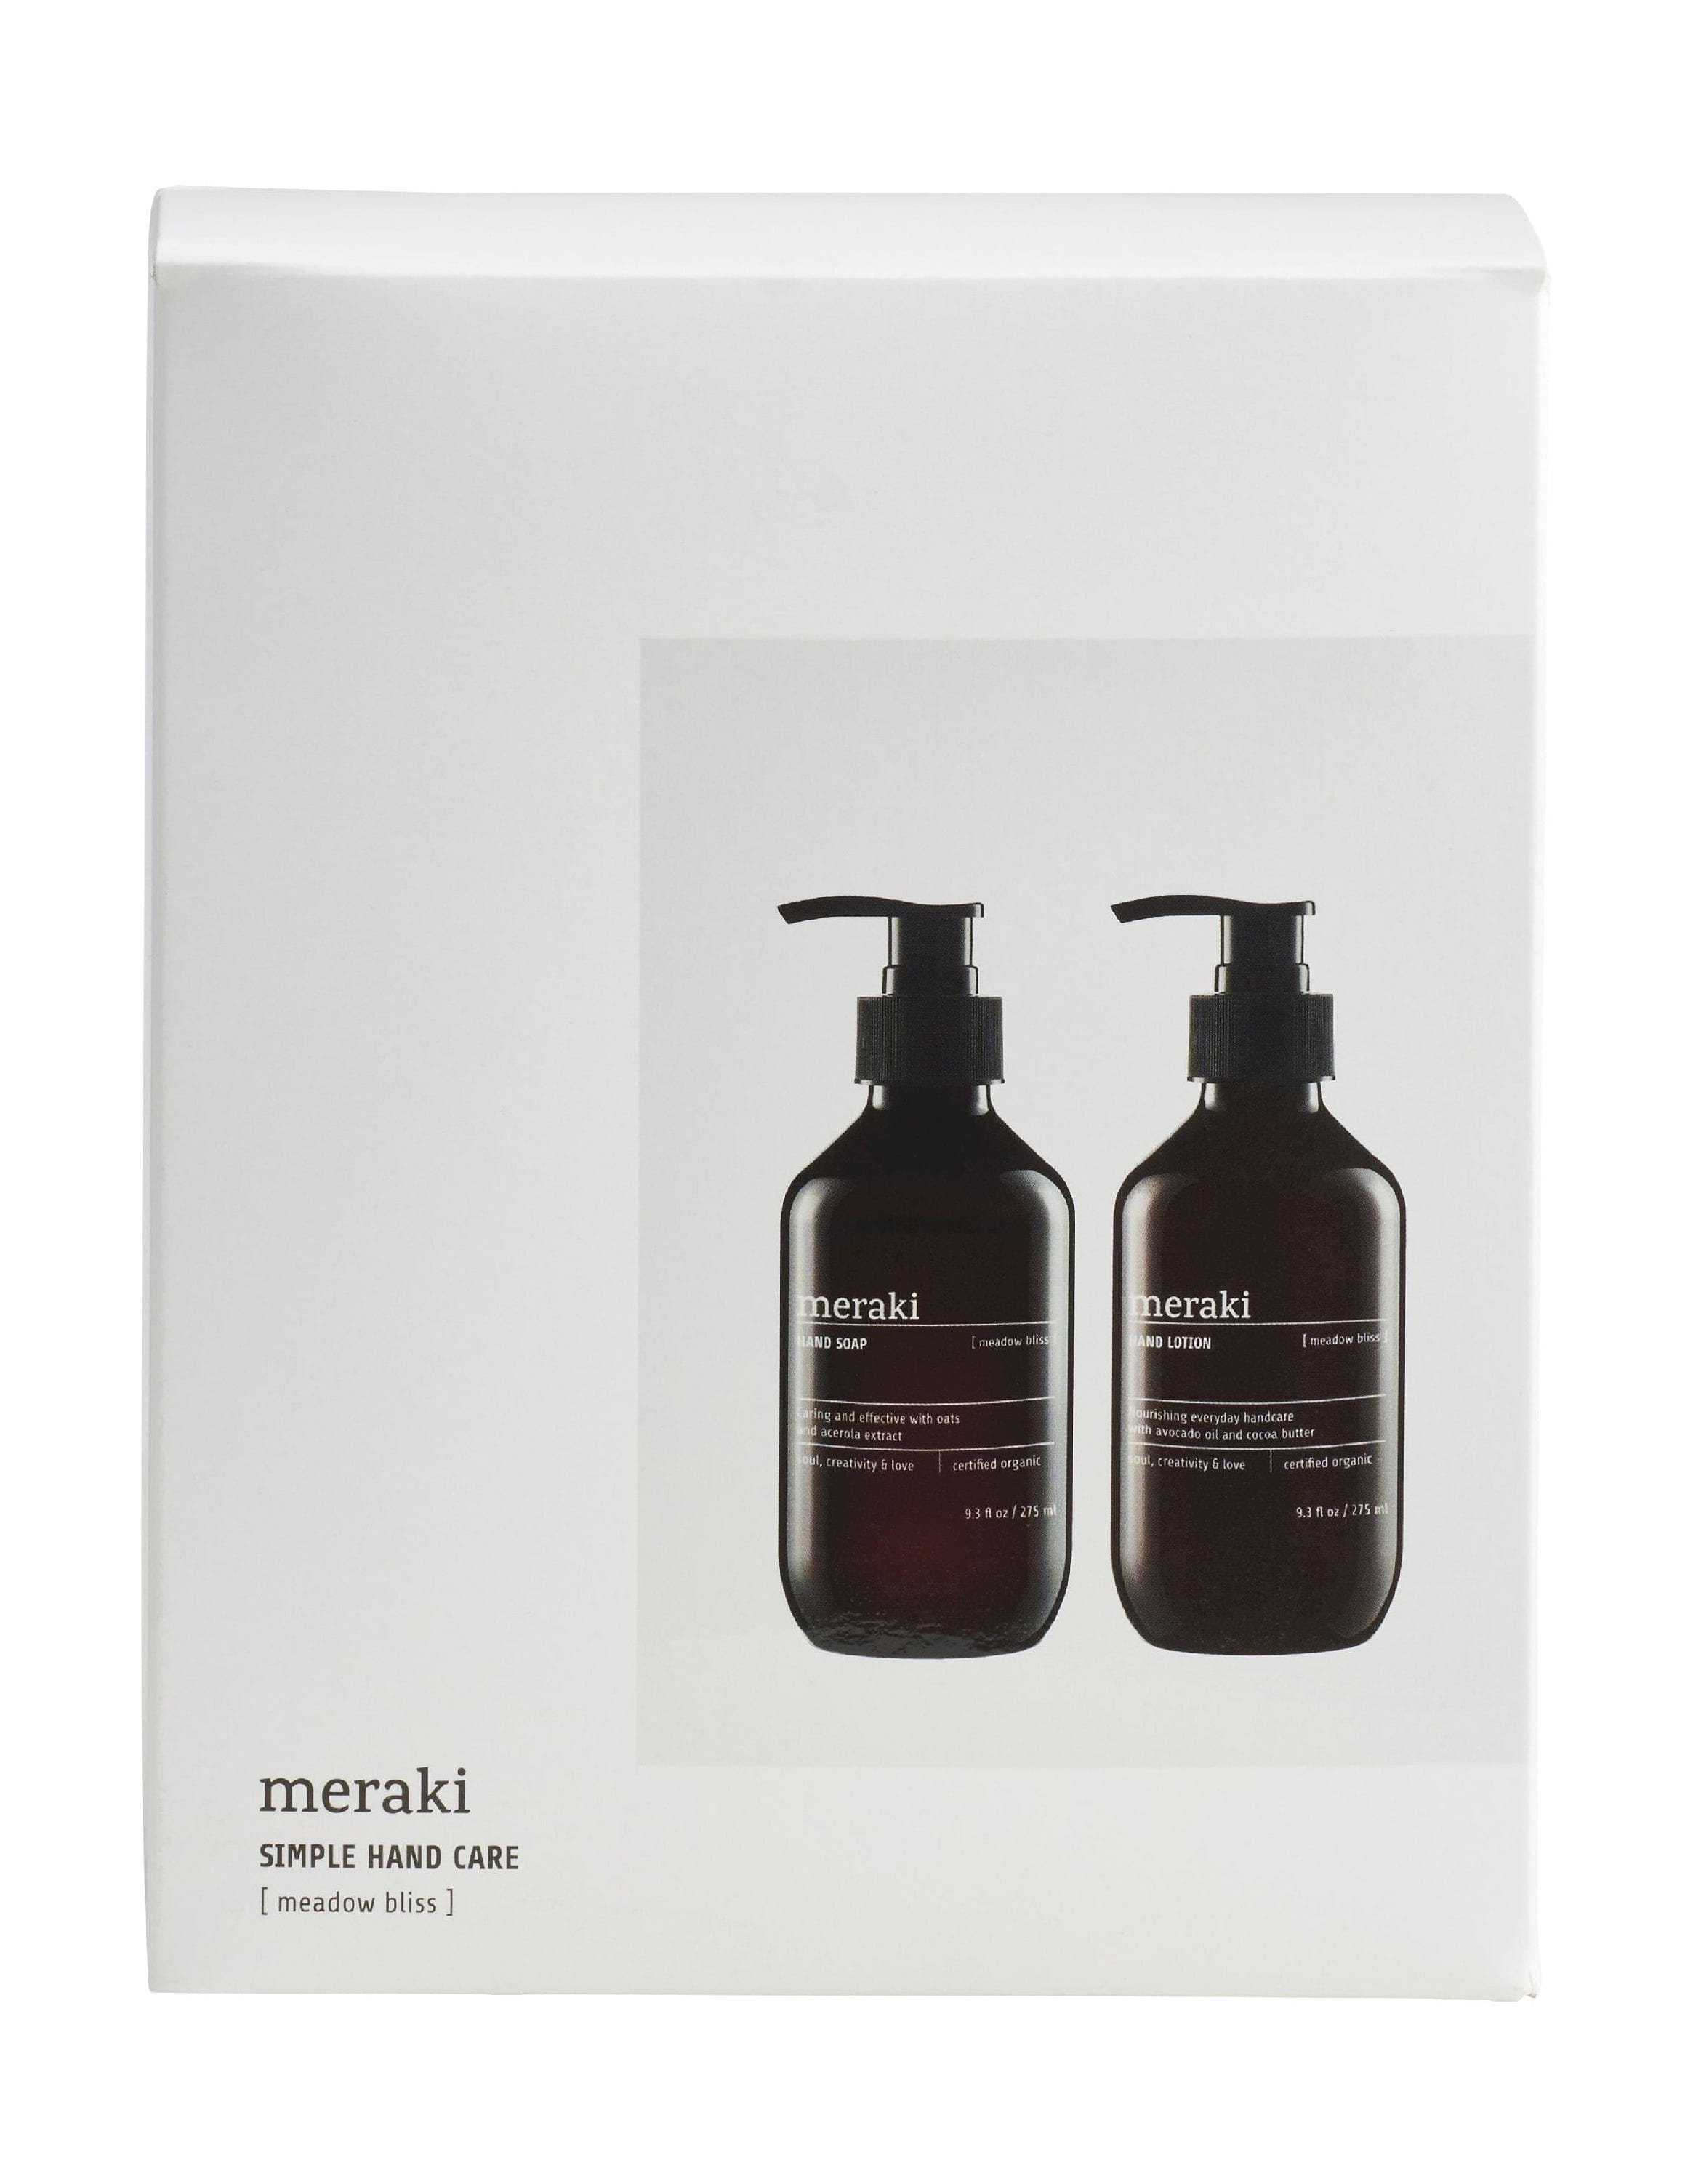 Meraki Simply Hand Care Gaveæske 275/275 ml, Meadow Bliss